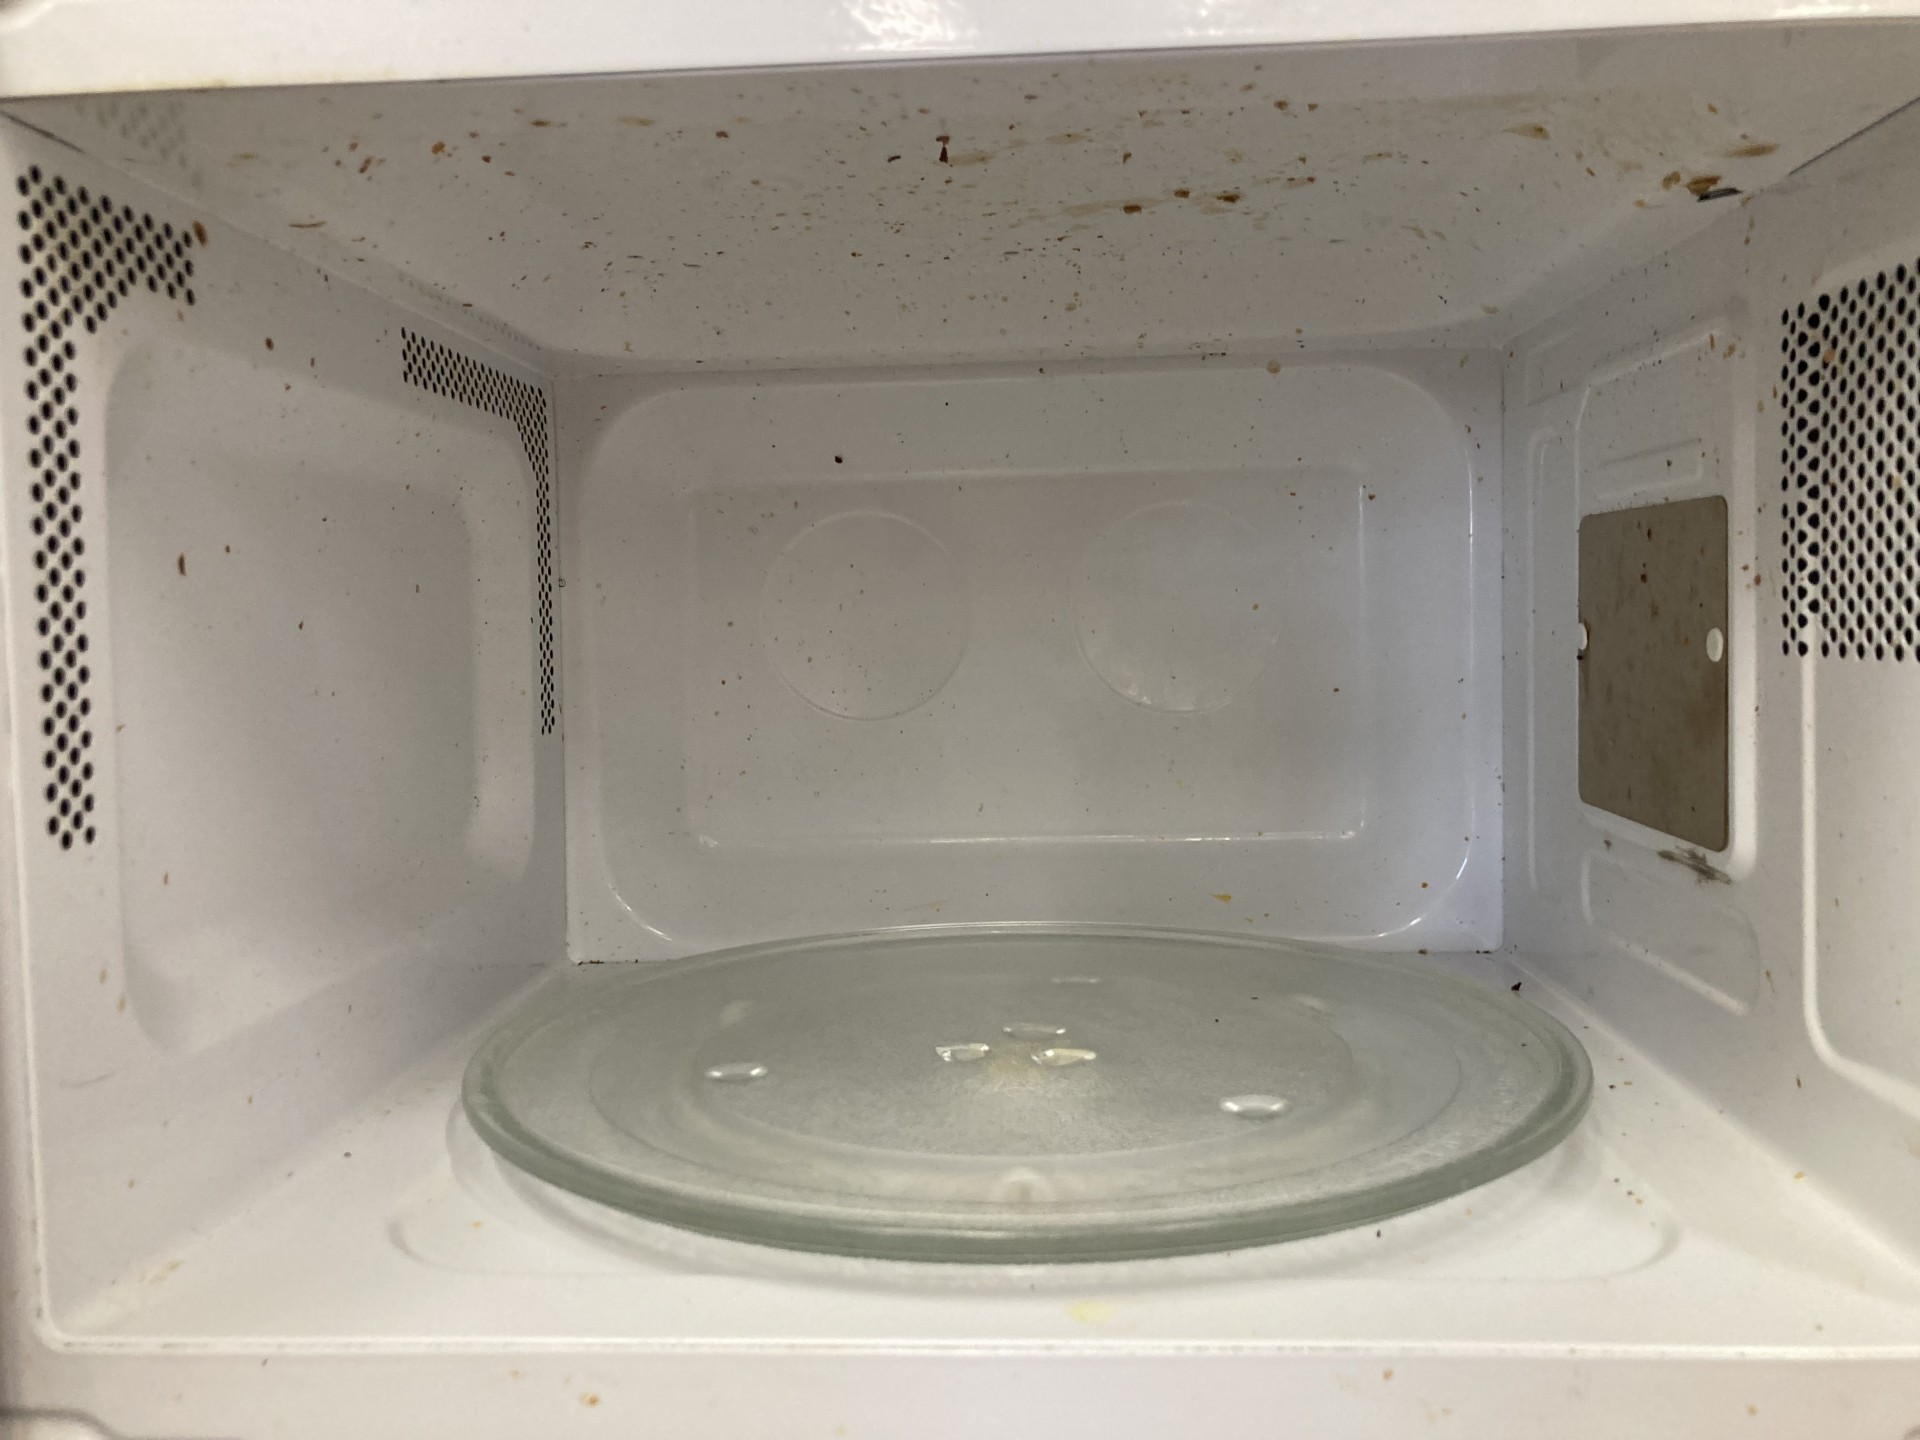 A Dirty Microwave